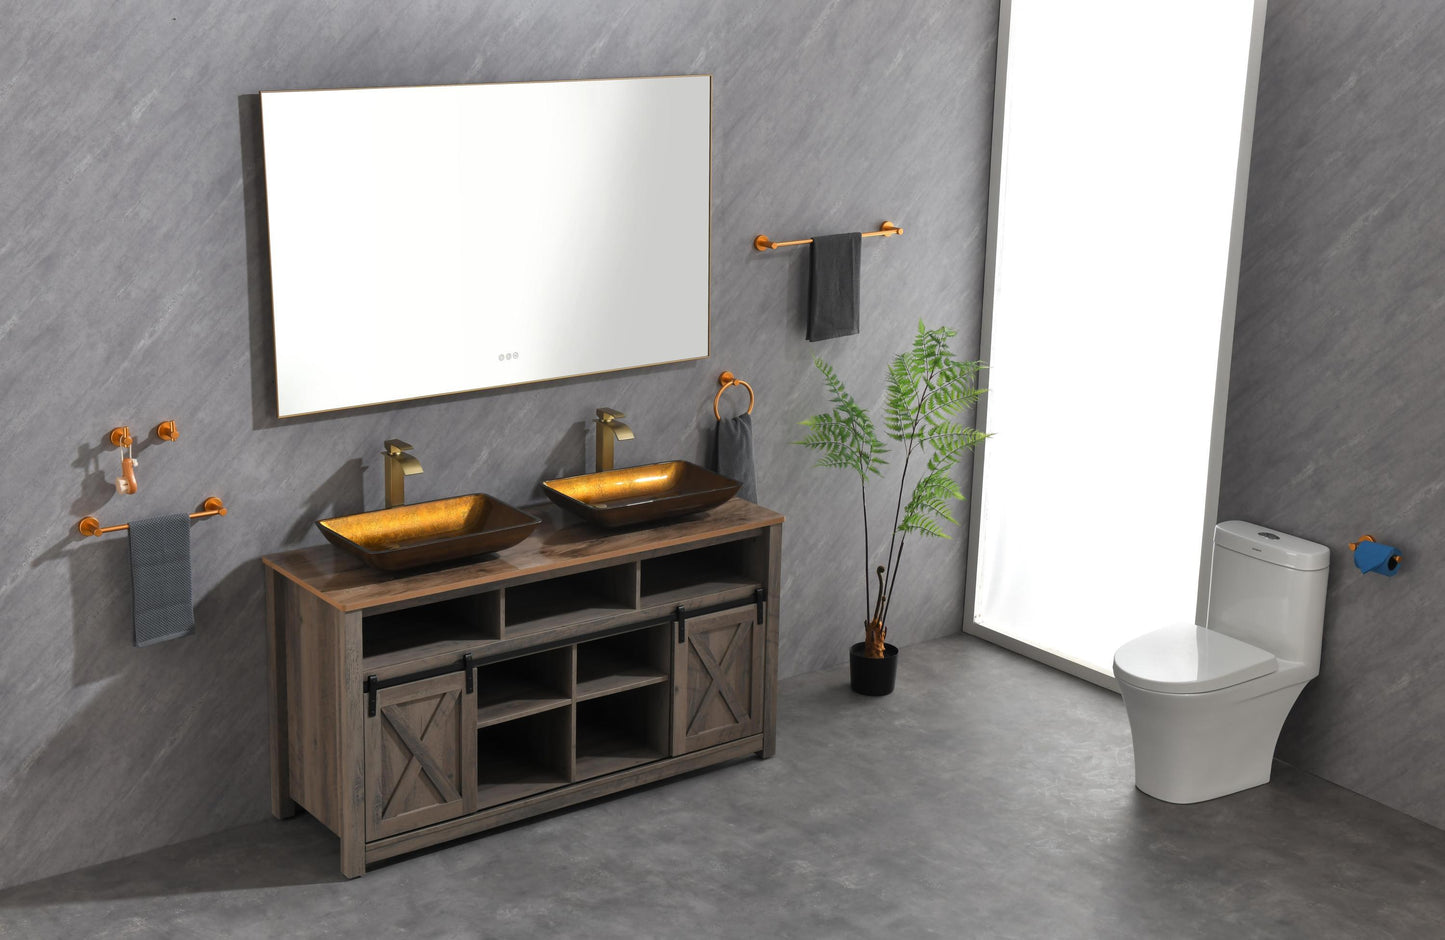 60x 36Inch LED Mirror Bathroom Vanity Mirror with Back Light, Wall Mount Anti-Fog Memory Large Adjustable Vanity Mirror